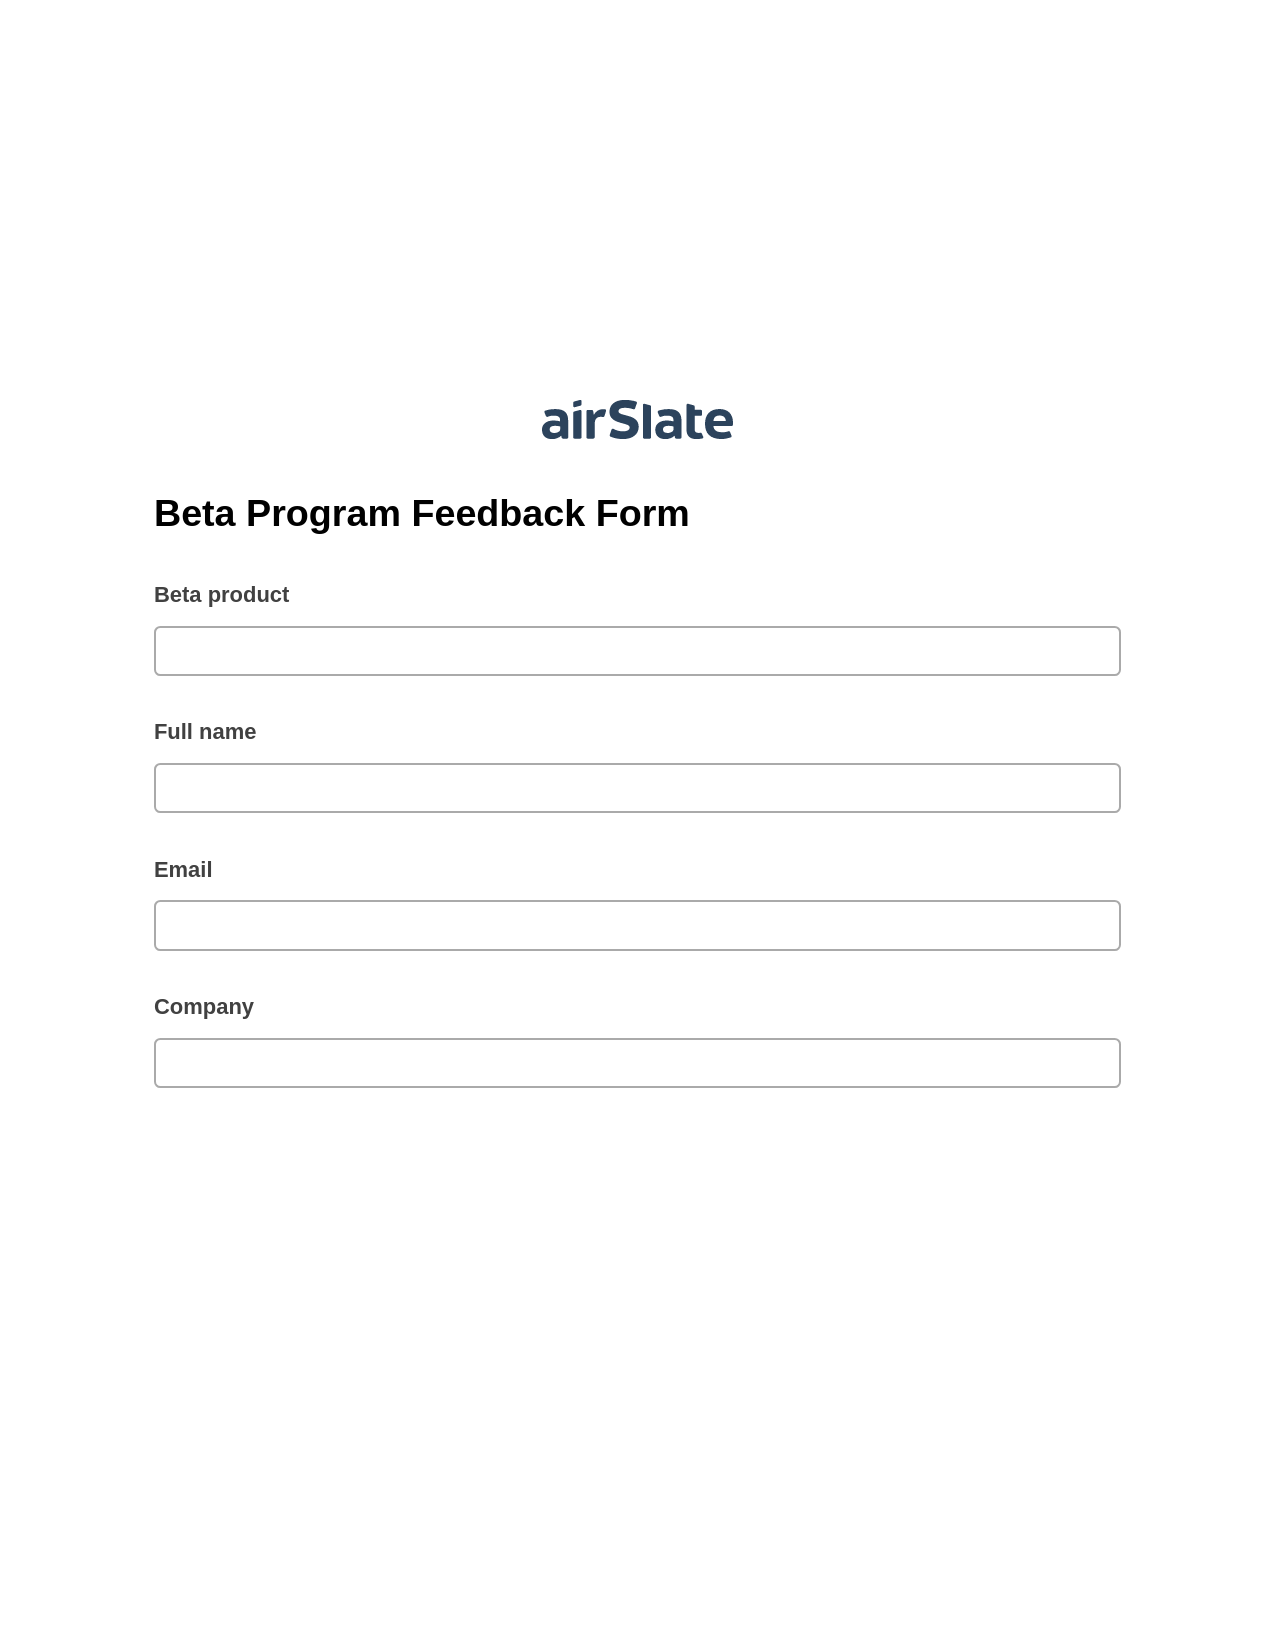 Beta Program Feedback Form Pre-fill from Litmos bot, Assign Slate Name Bot, Archive to SharePoint Folder Bot